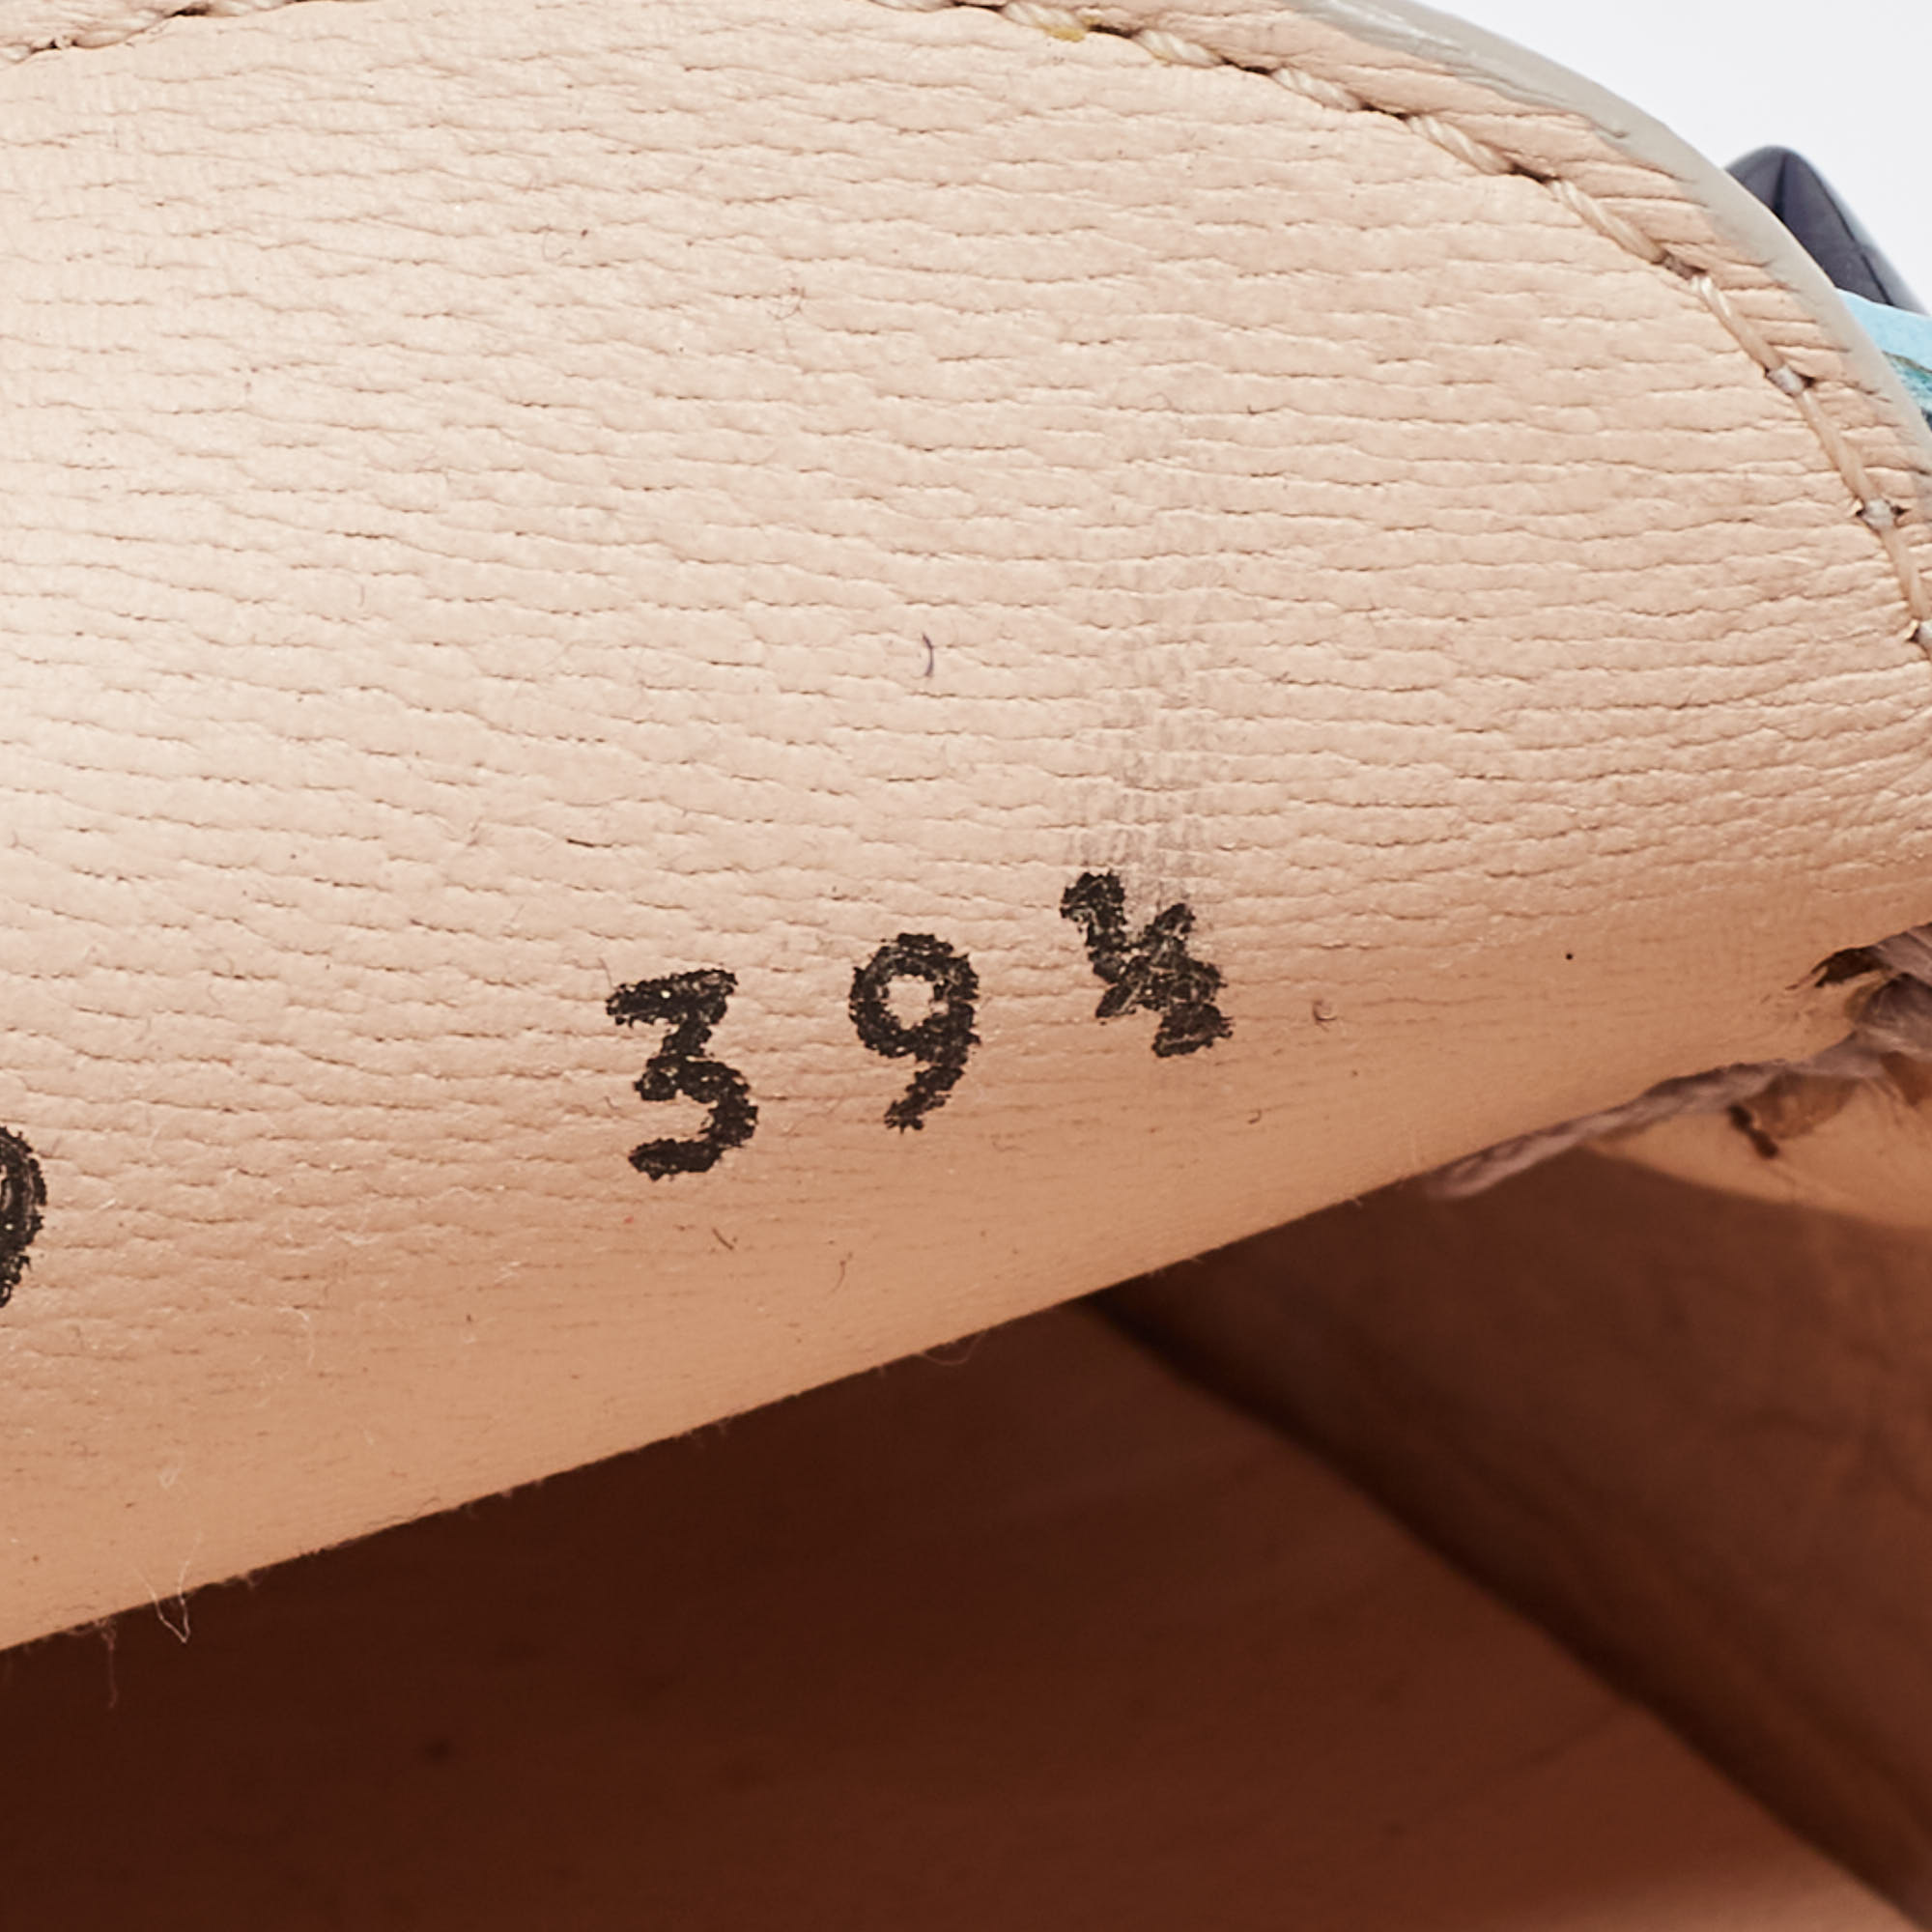 Fendi Grey Leather Studded Flowerland Loafers Size 39.5